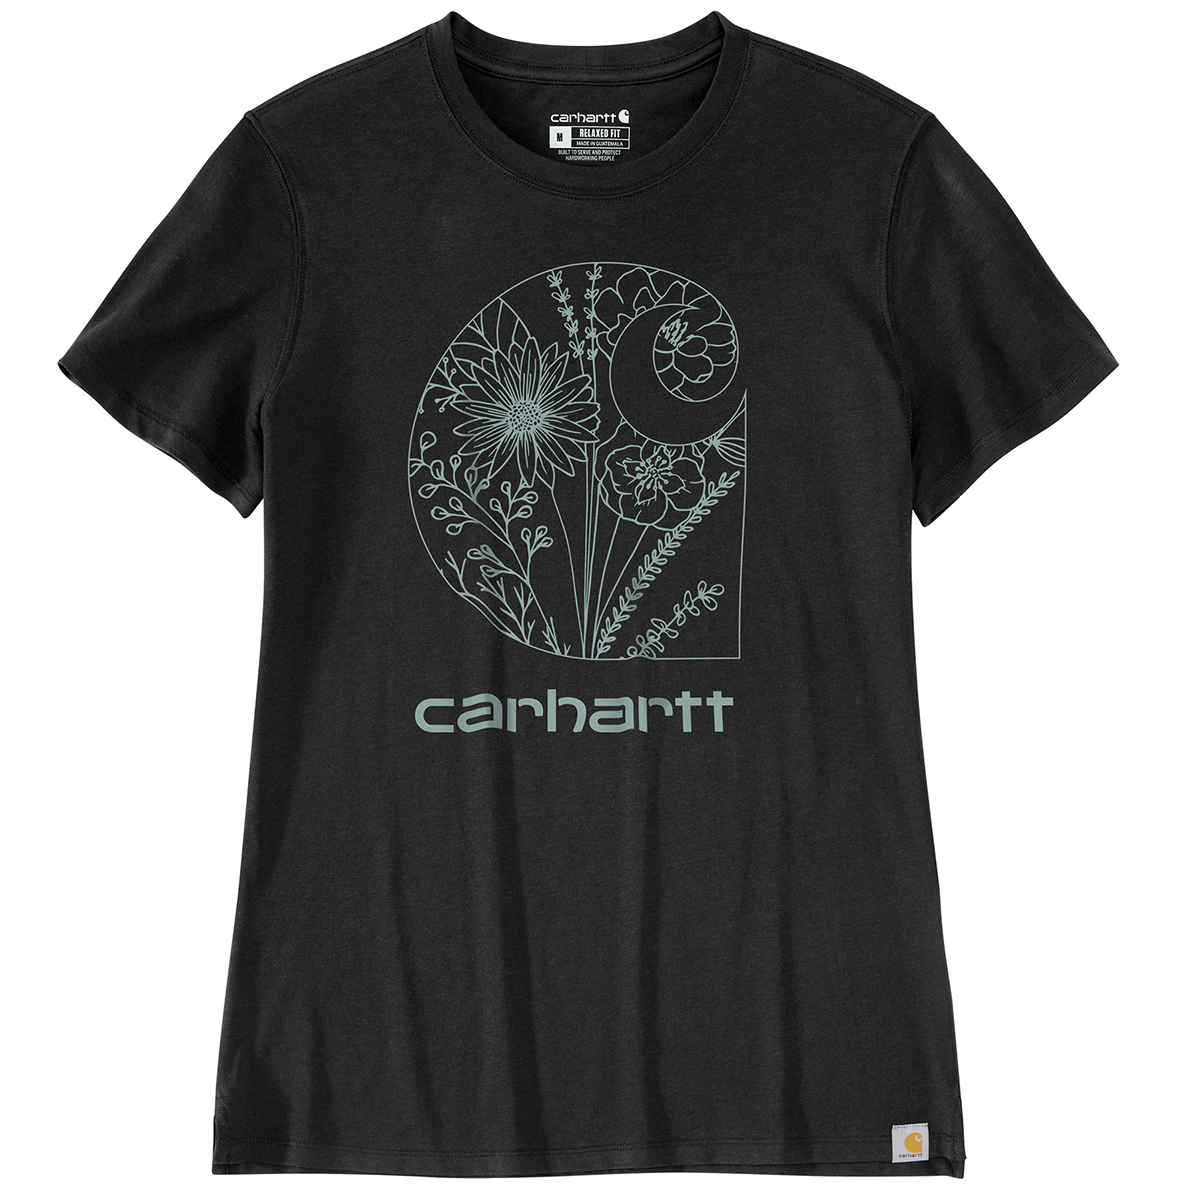 Carhartt Women's 105741 Relaxed Fit Lightweight Short-Sleeve Floral C Graphic T-Shirt, Black